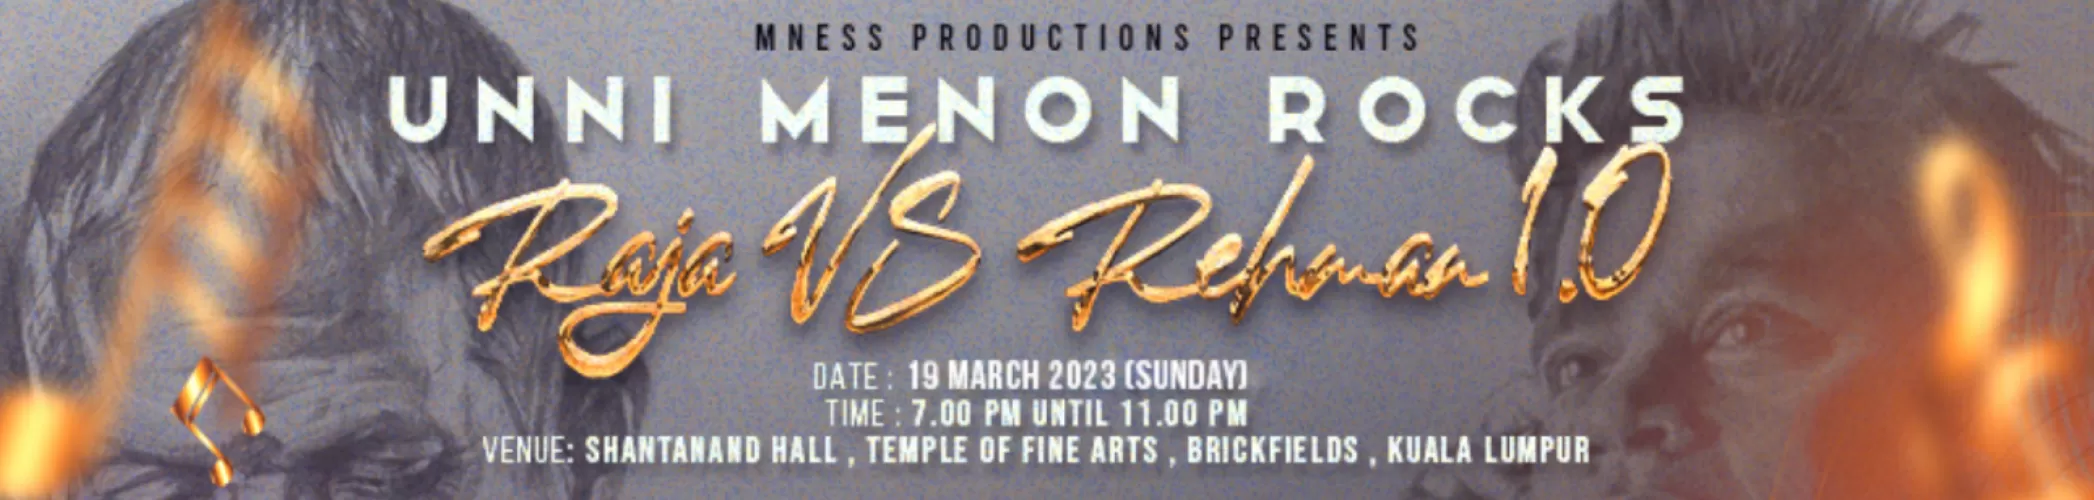 UNNI MENON Rocks” Raja Vs Rehman 1.0 live in Kuala Lumpur Teaser